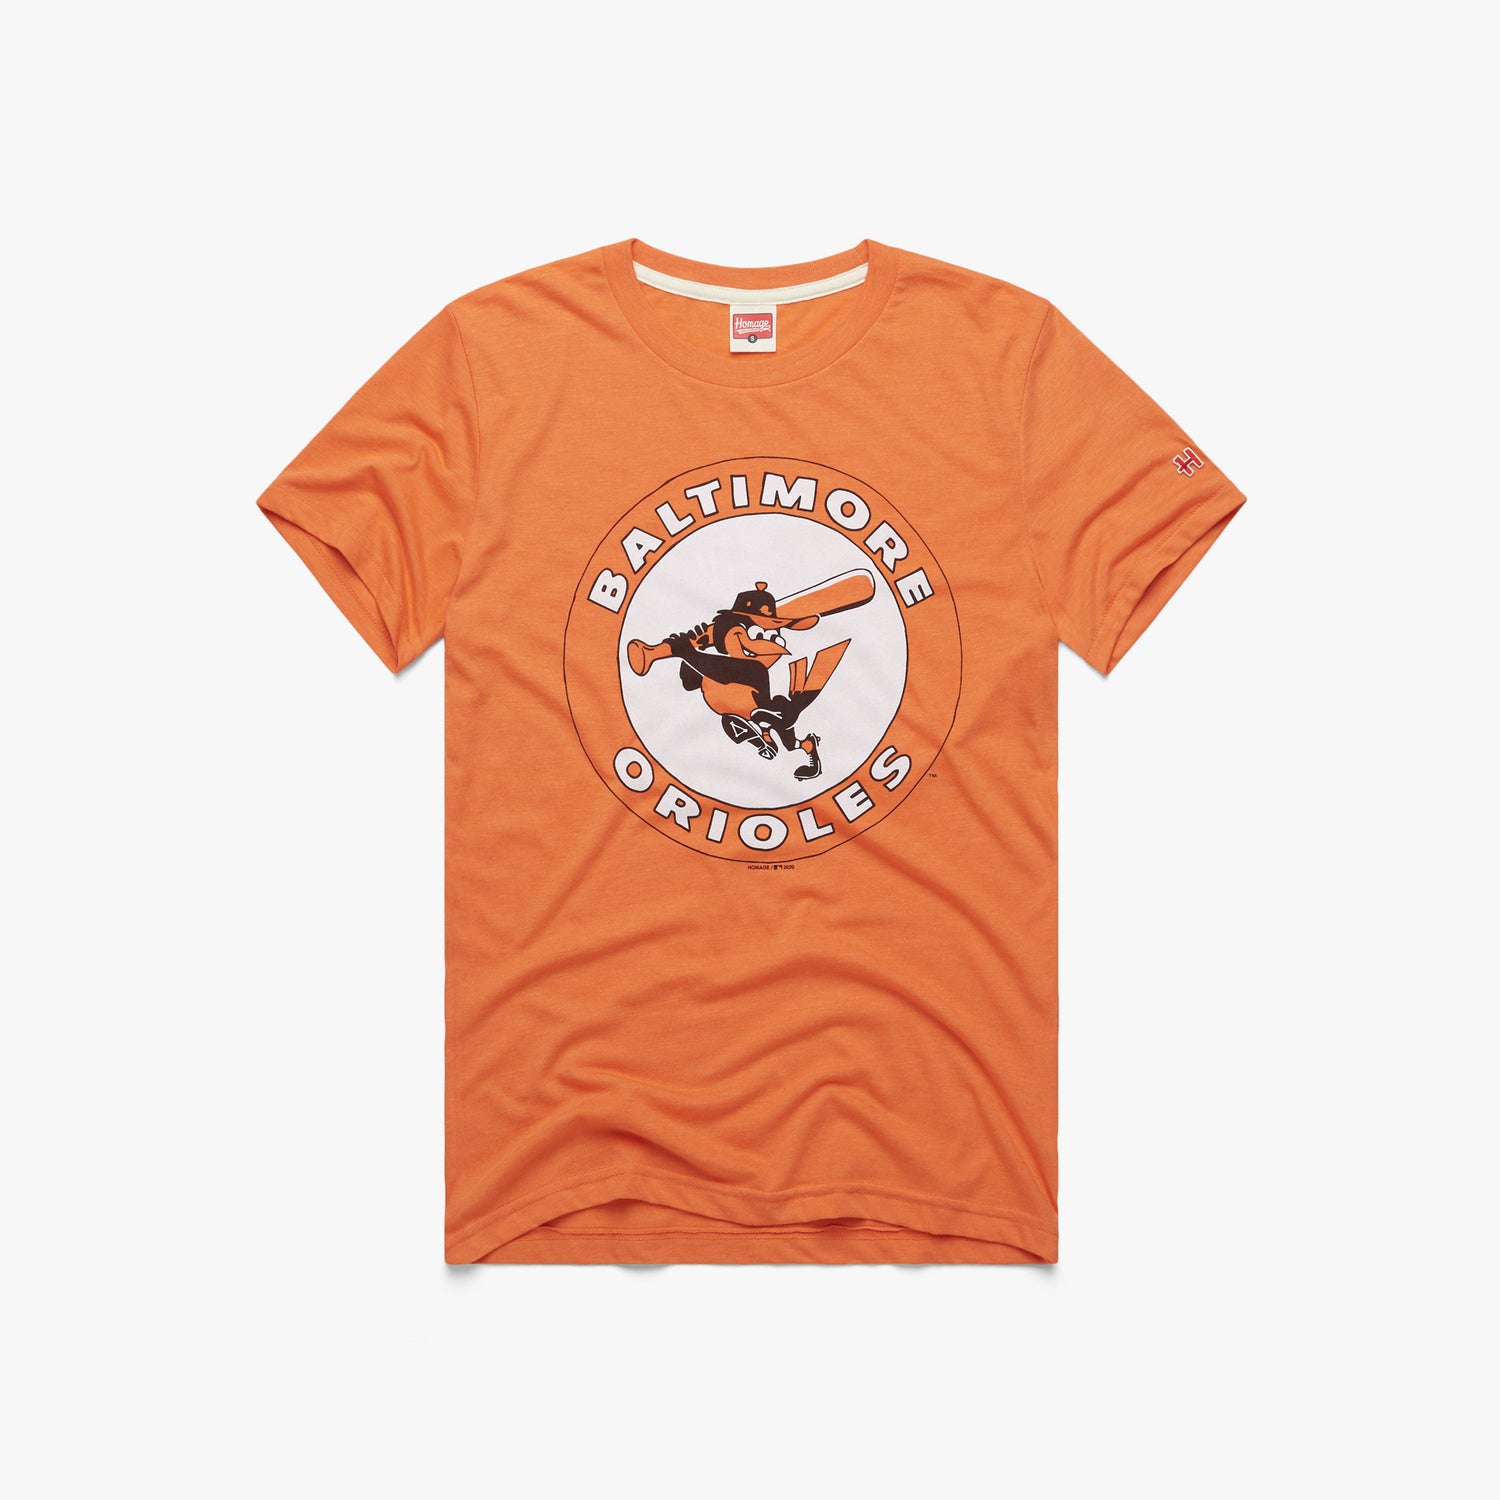 Baltimore Orioles Shirt Mens XL Baseball Short Sleeve Crew Neck Orange